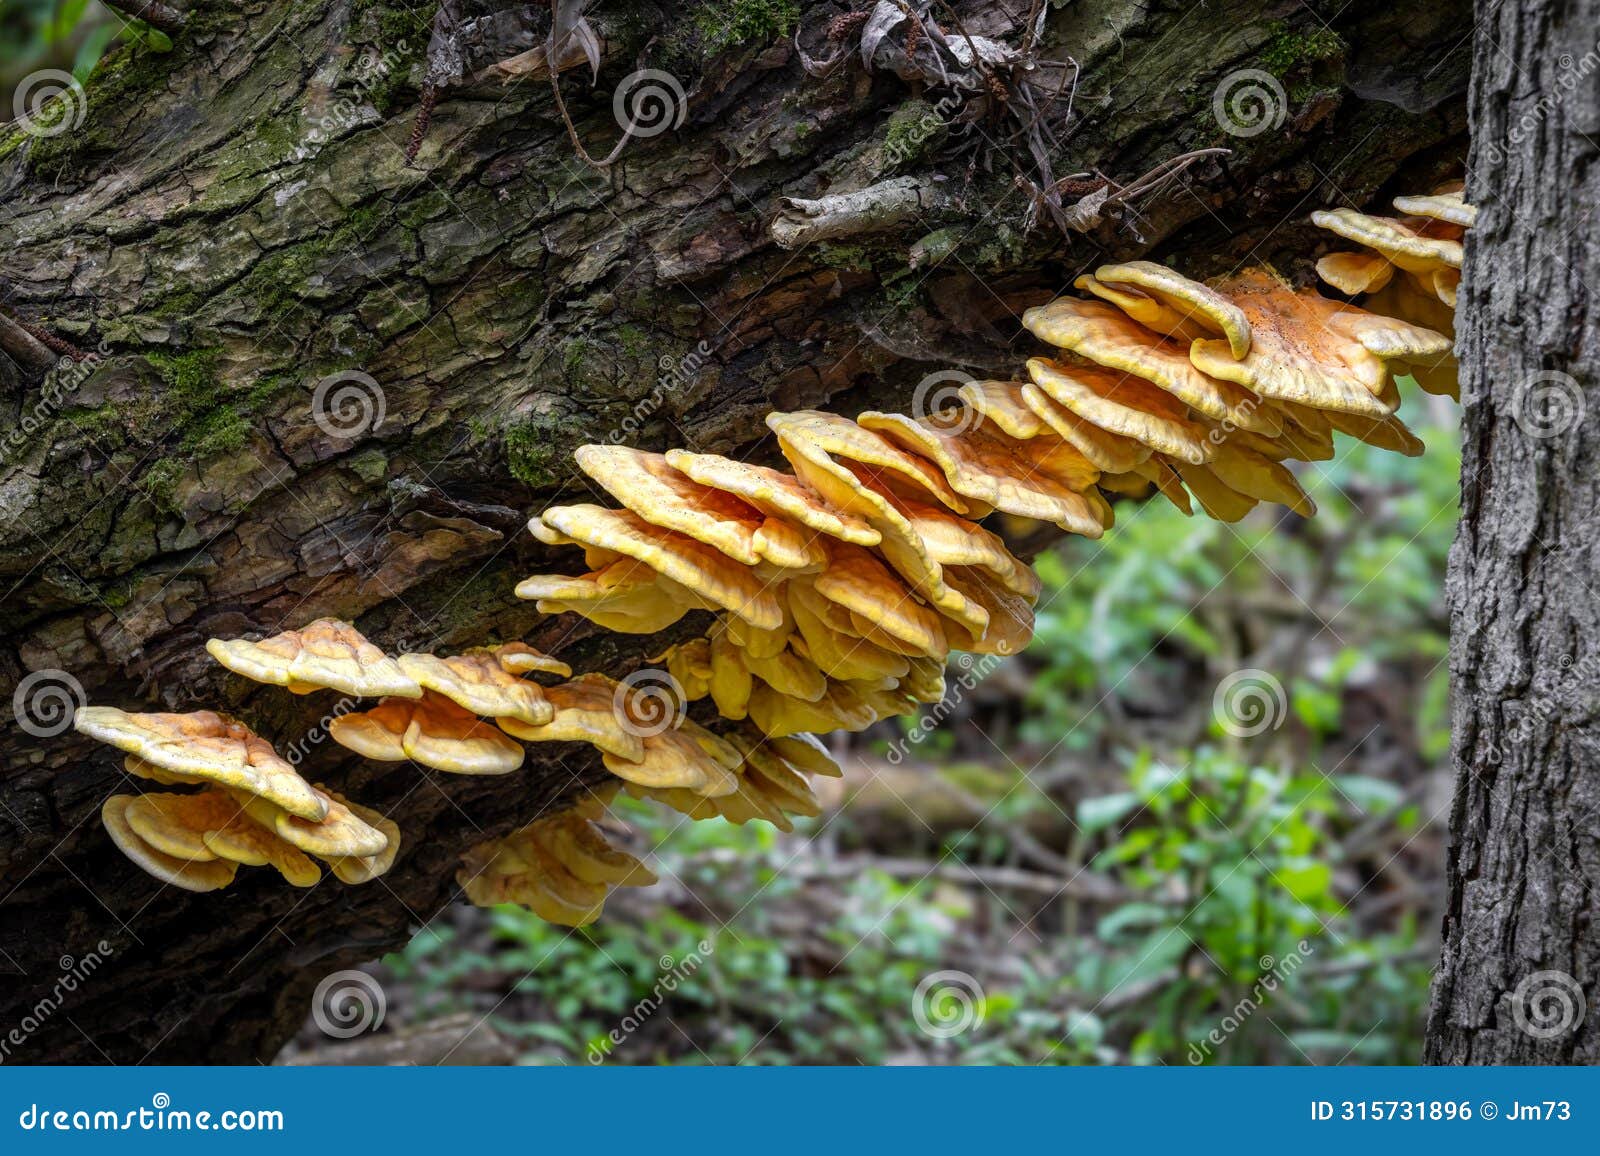 mushroom laetiporus sulphureus commonly known as chicken of woods